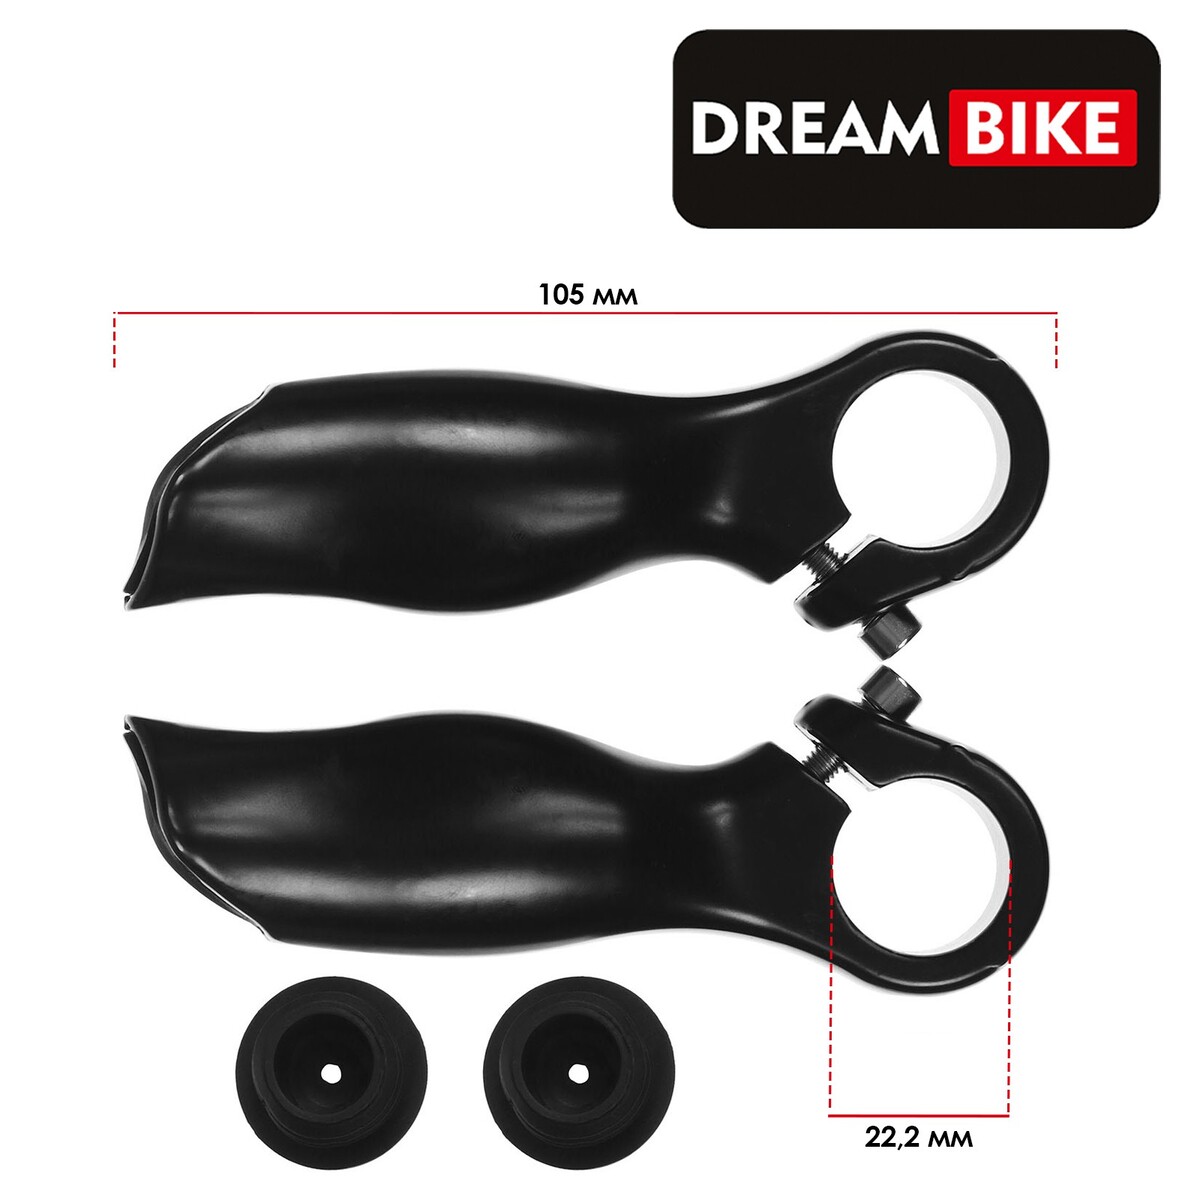 Рога на руль dream bike, k-14, алюминиевые, цвет черный Dream Bike